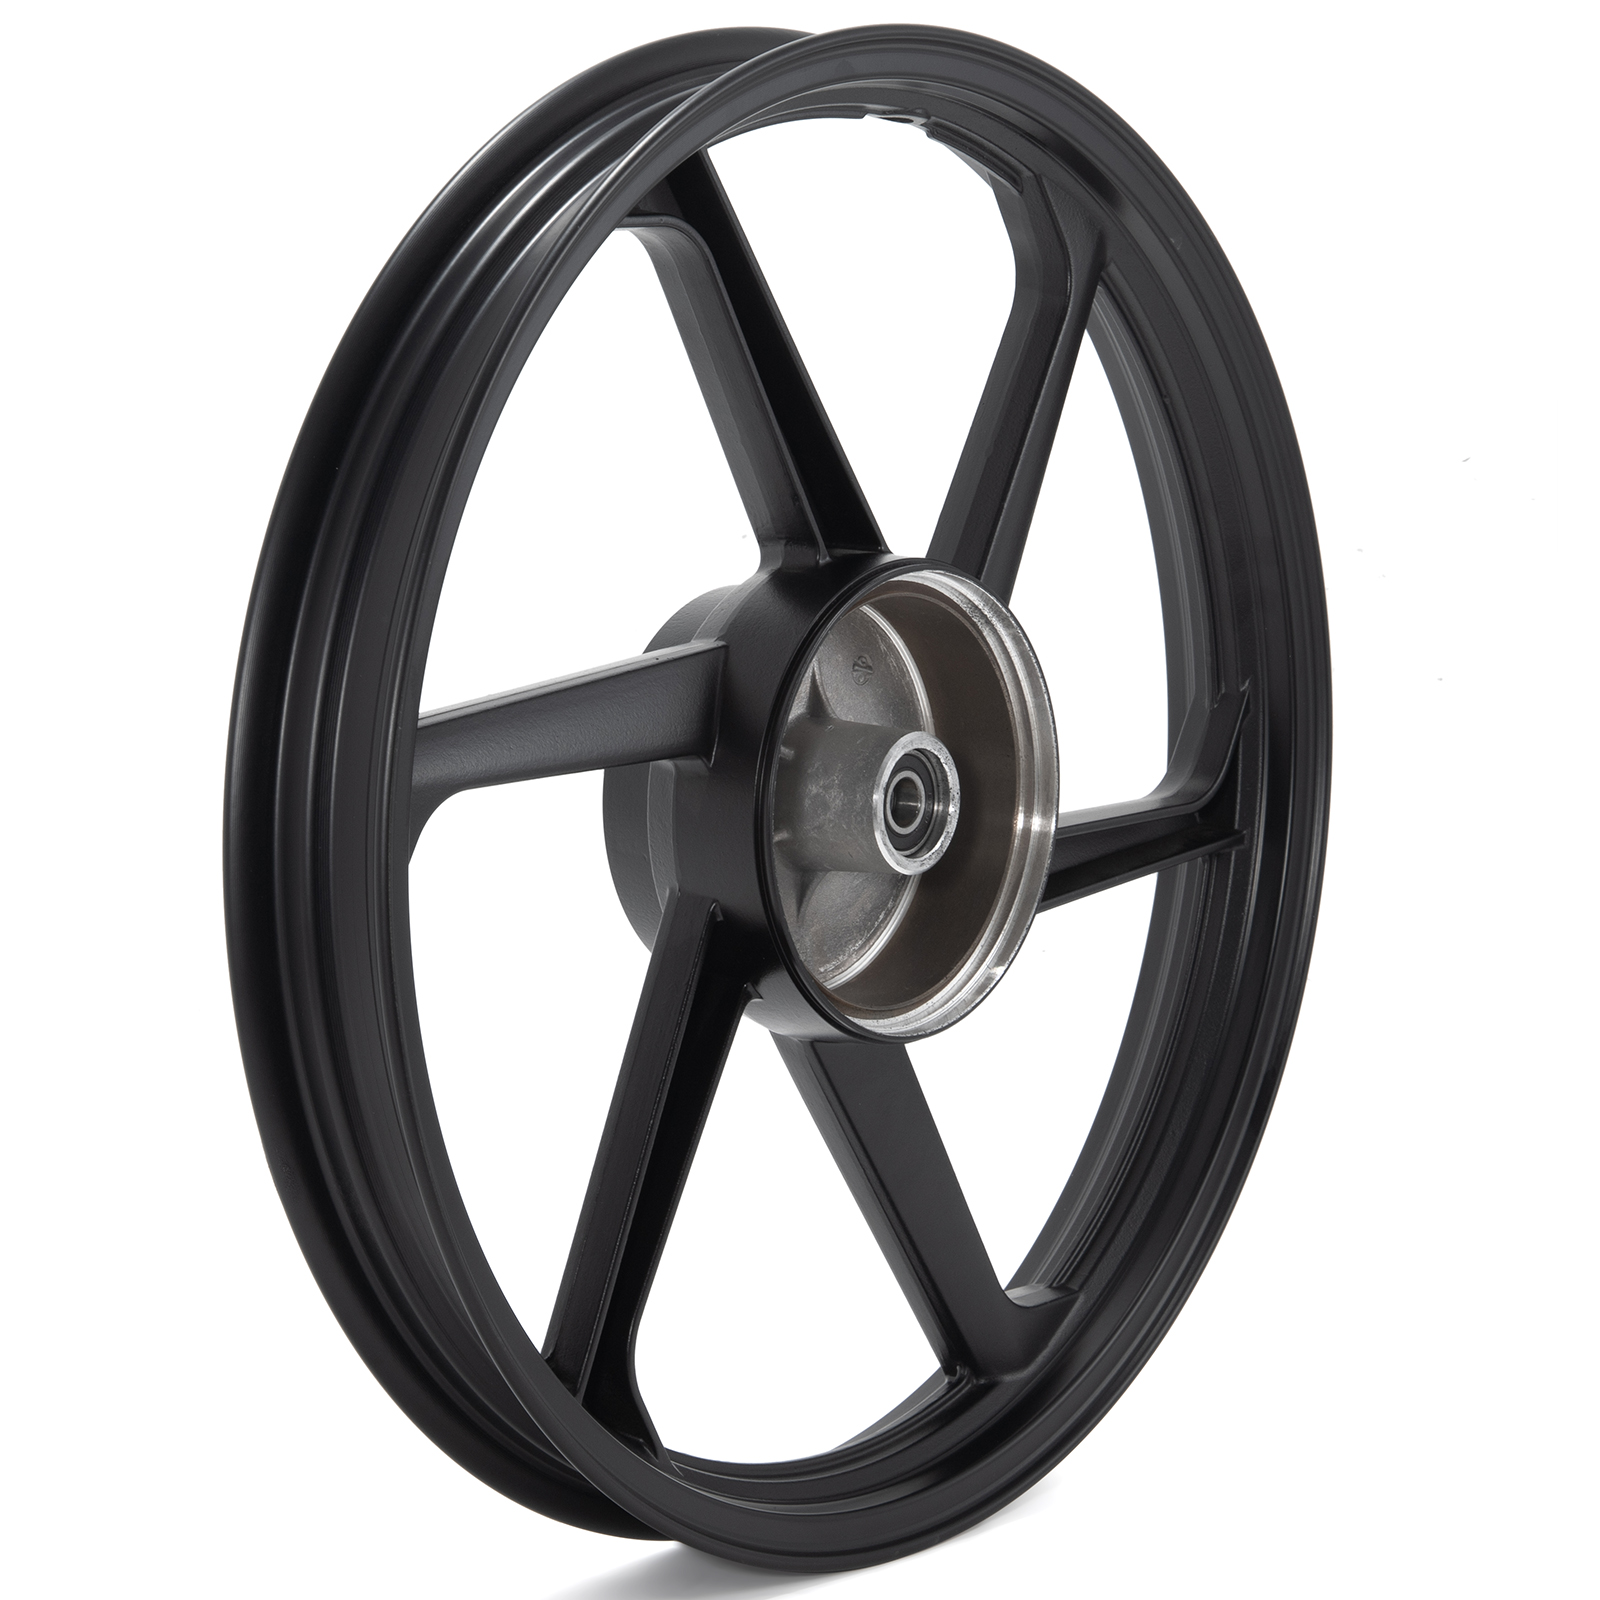  For TITAN150 6 Spoke Motorcycle Aluminum Alloy Wheel Rim